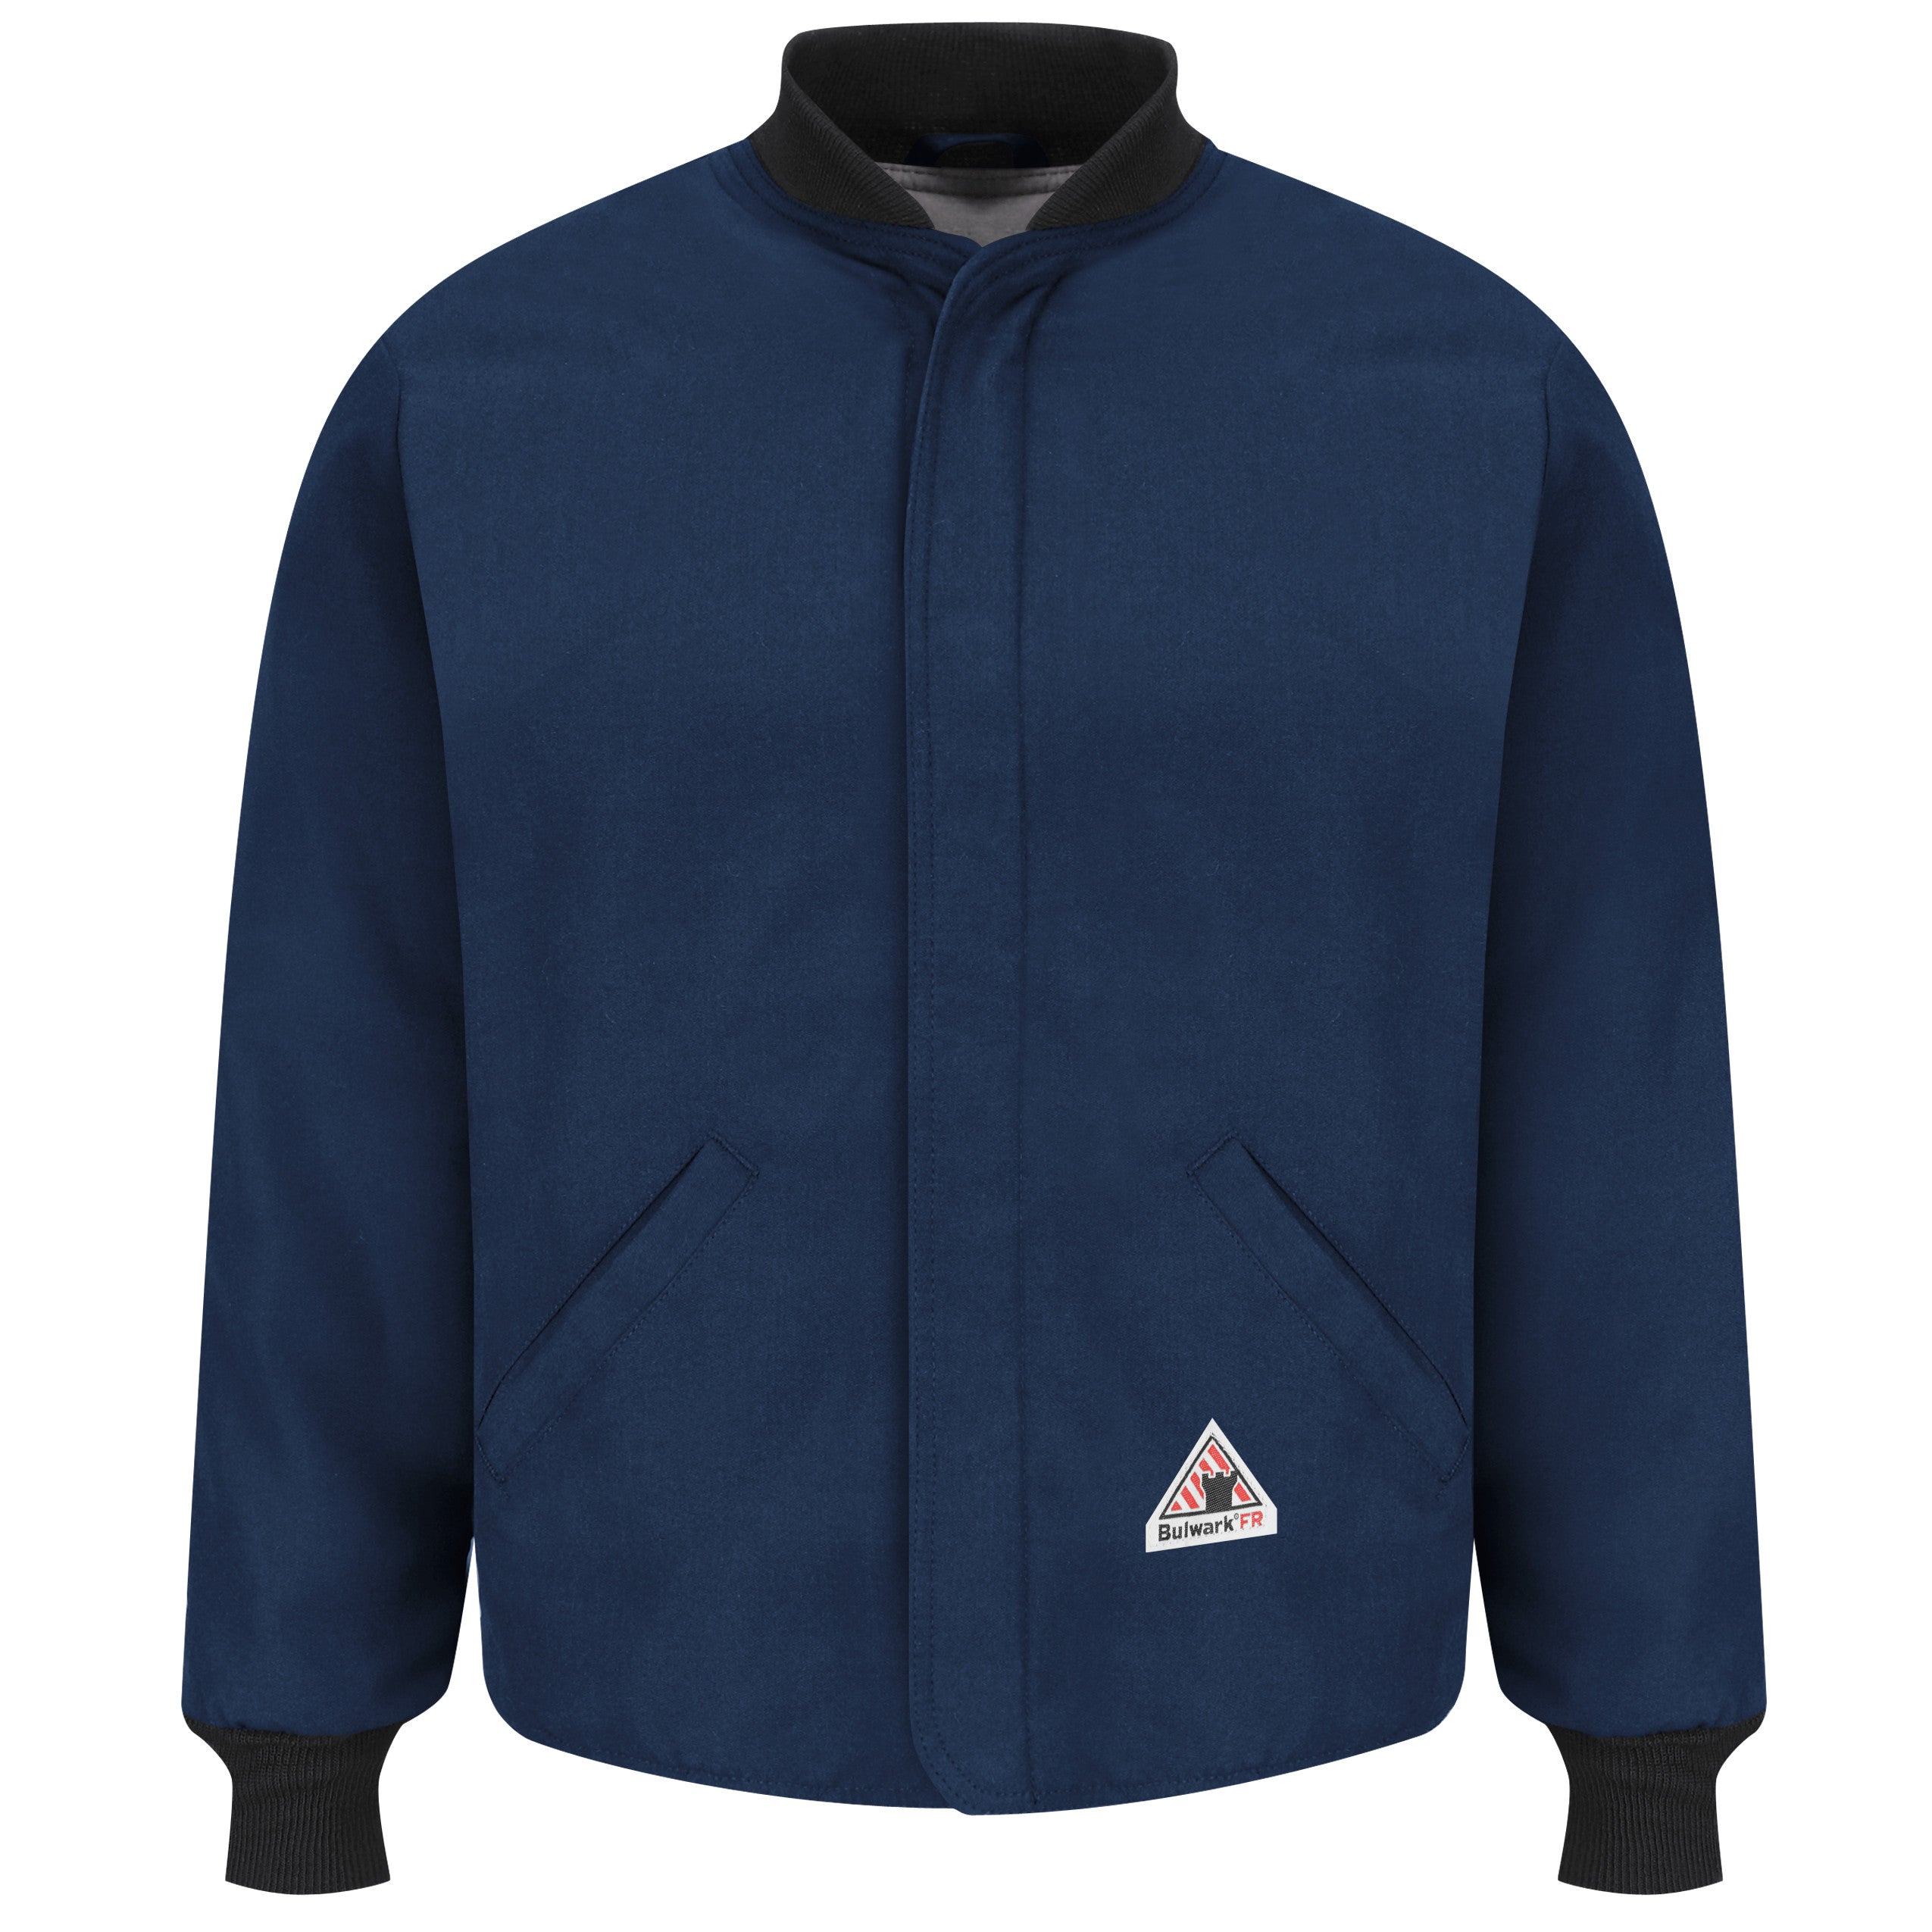 Men's Lightweight FR Sleeved Jacket Liner LLL2 - Navy-eSafety Supplies, Inc